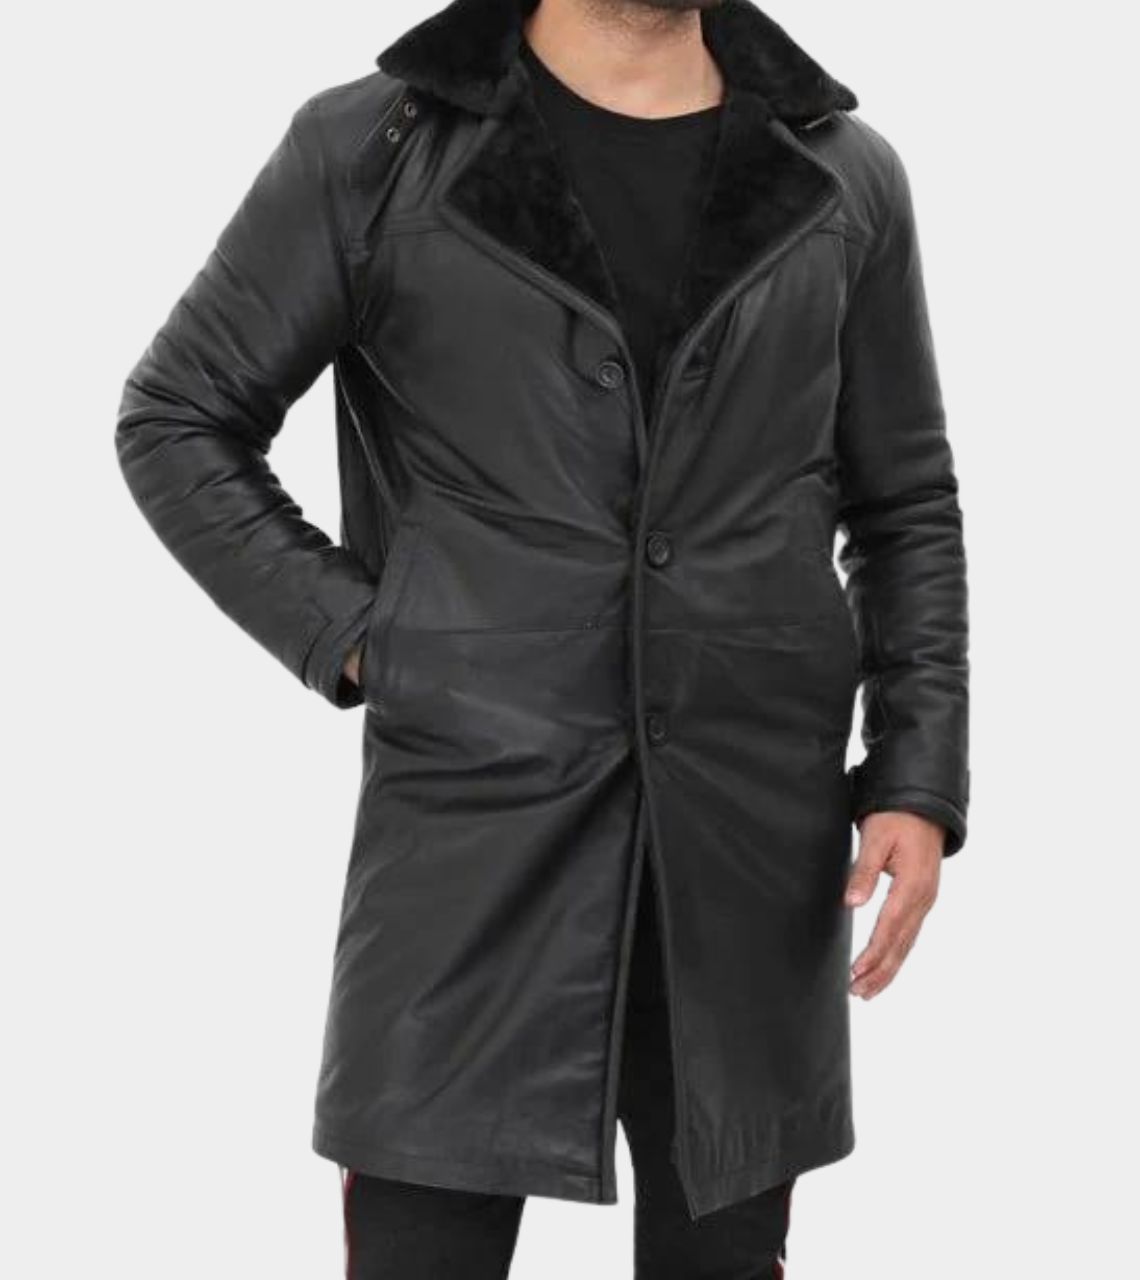  Men's Leather Coat